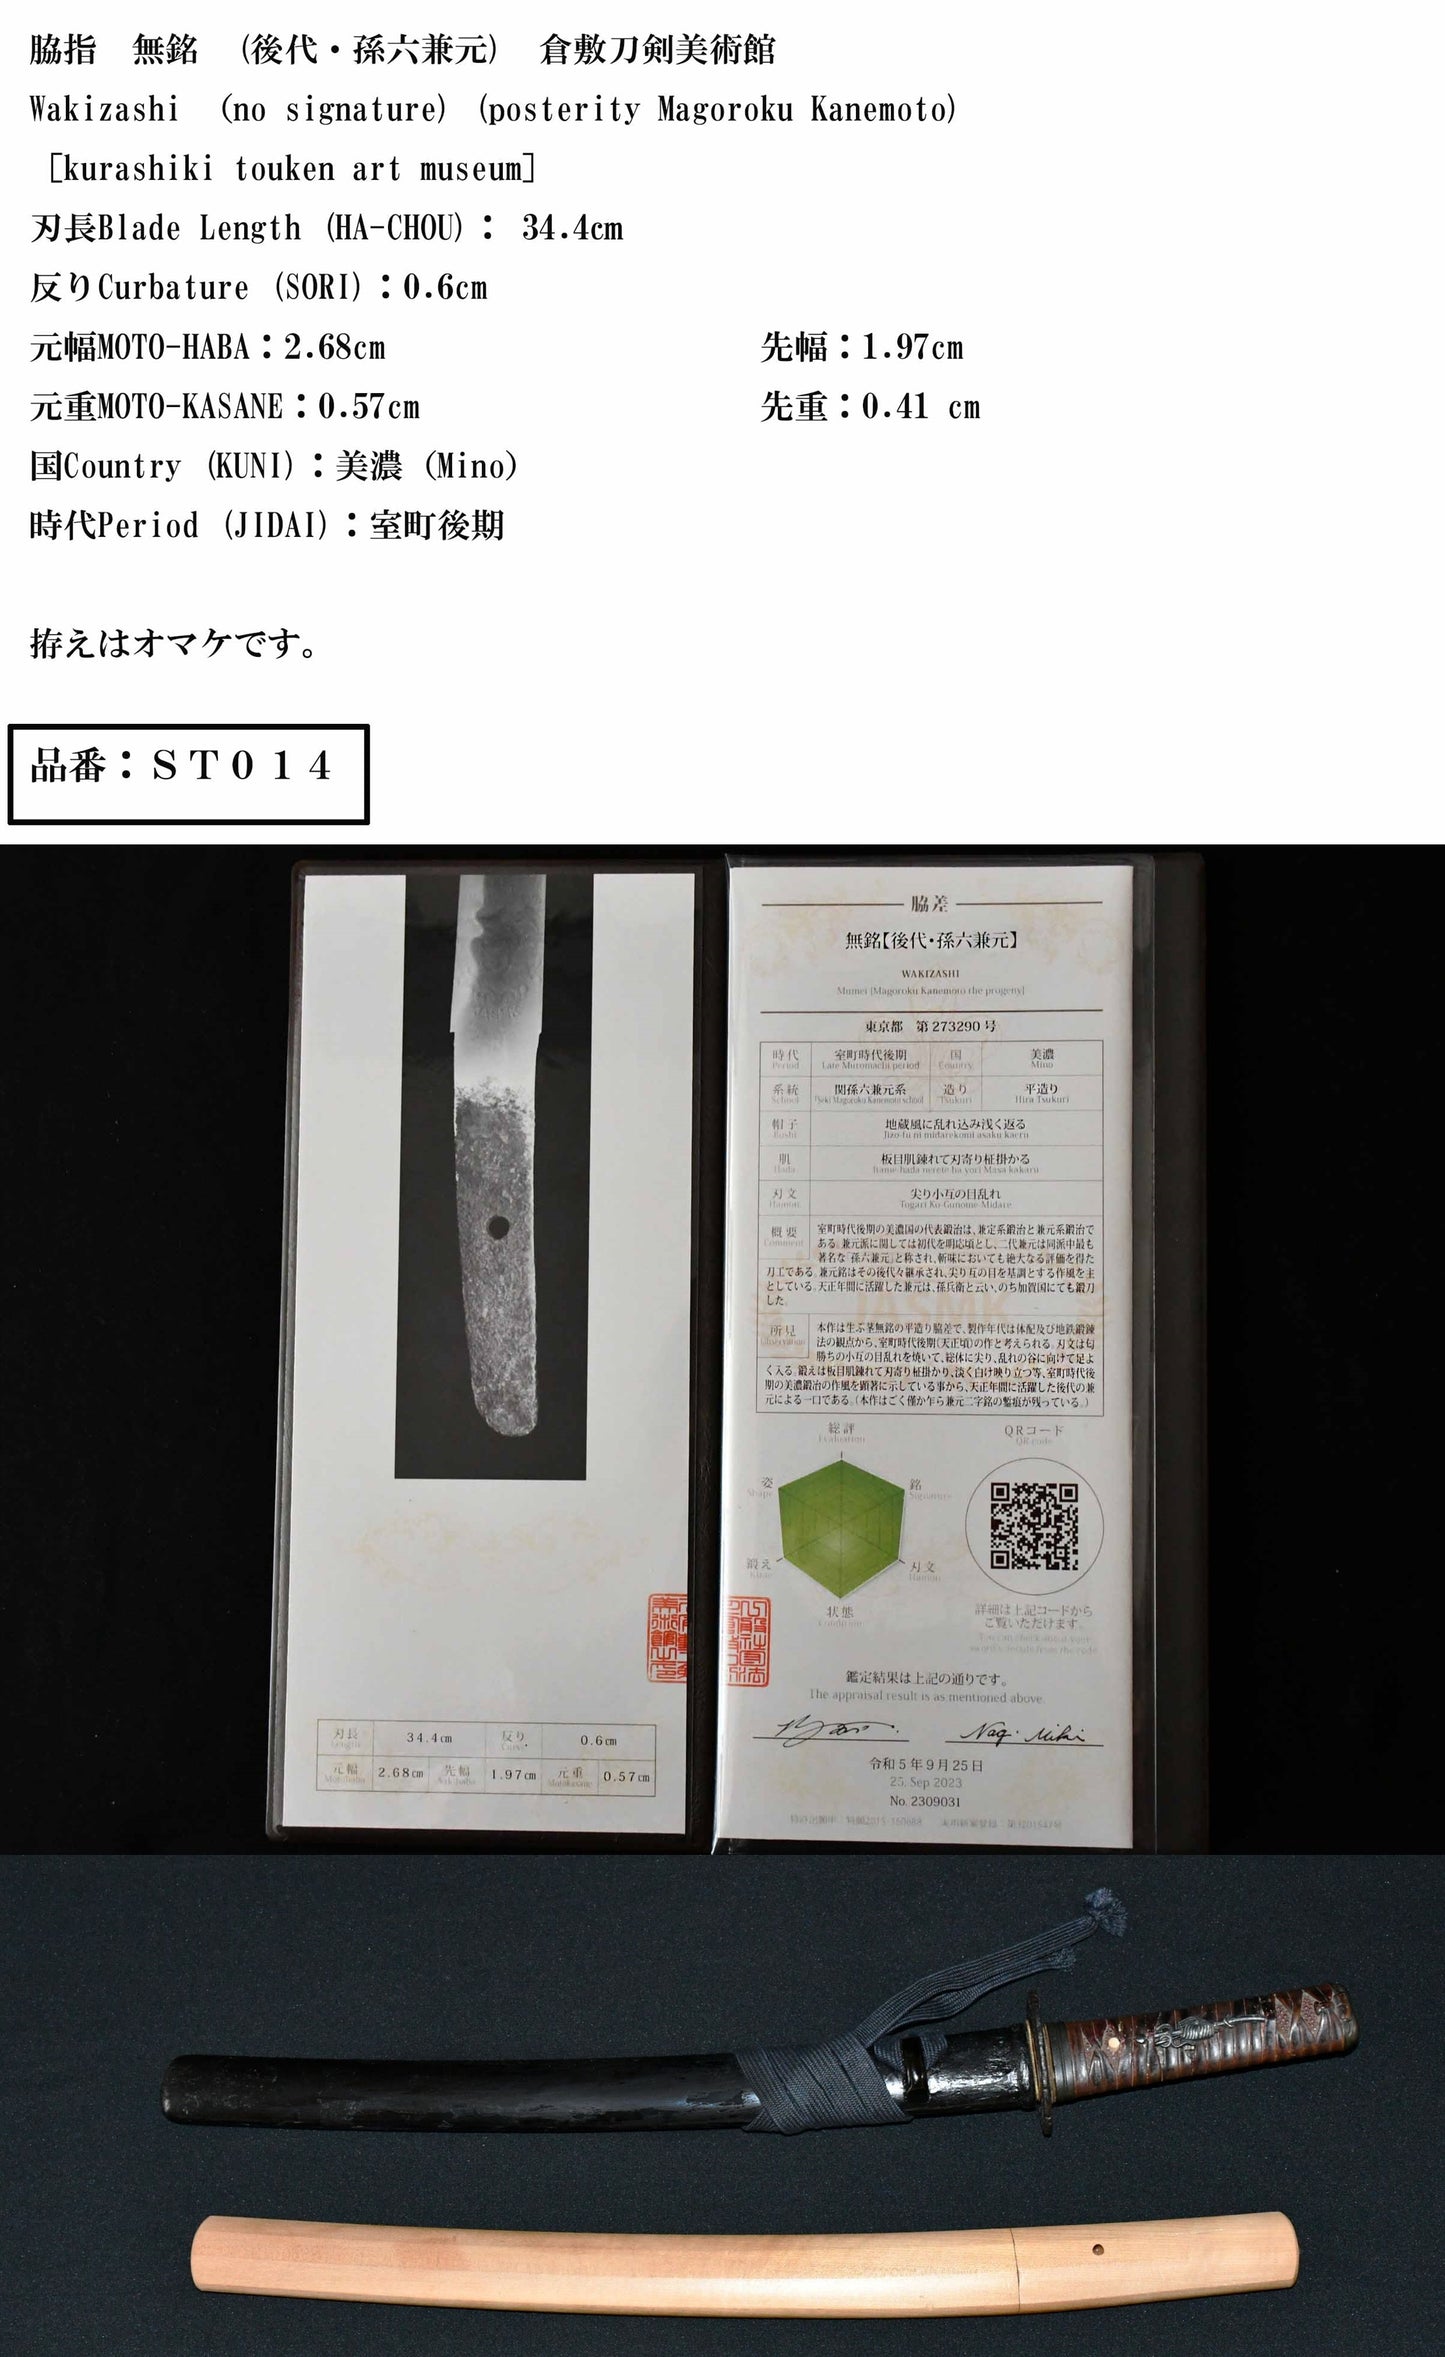 Wakizashi (NO Signature) (Posterity Magoroku Kanemoto) [KURASHIKI TOUKEN ART MUSEUM] Product number: MB004